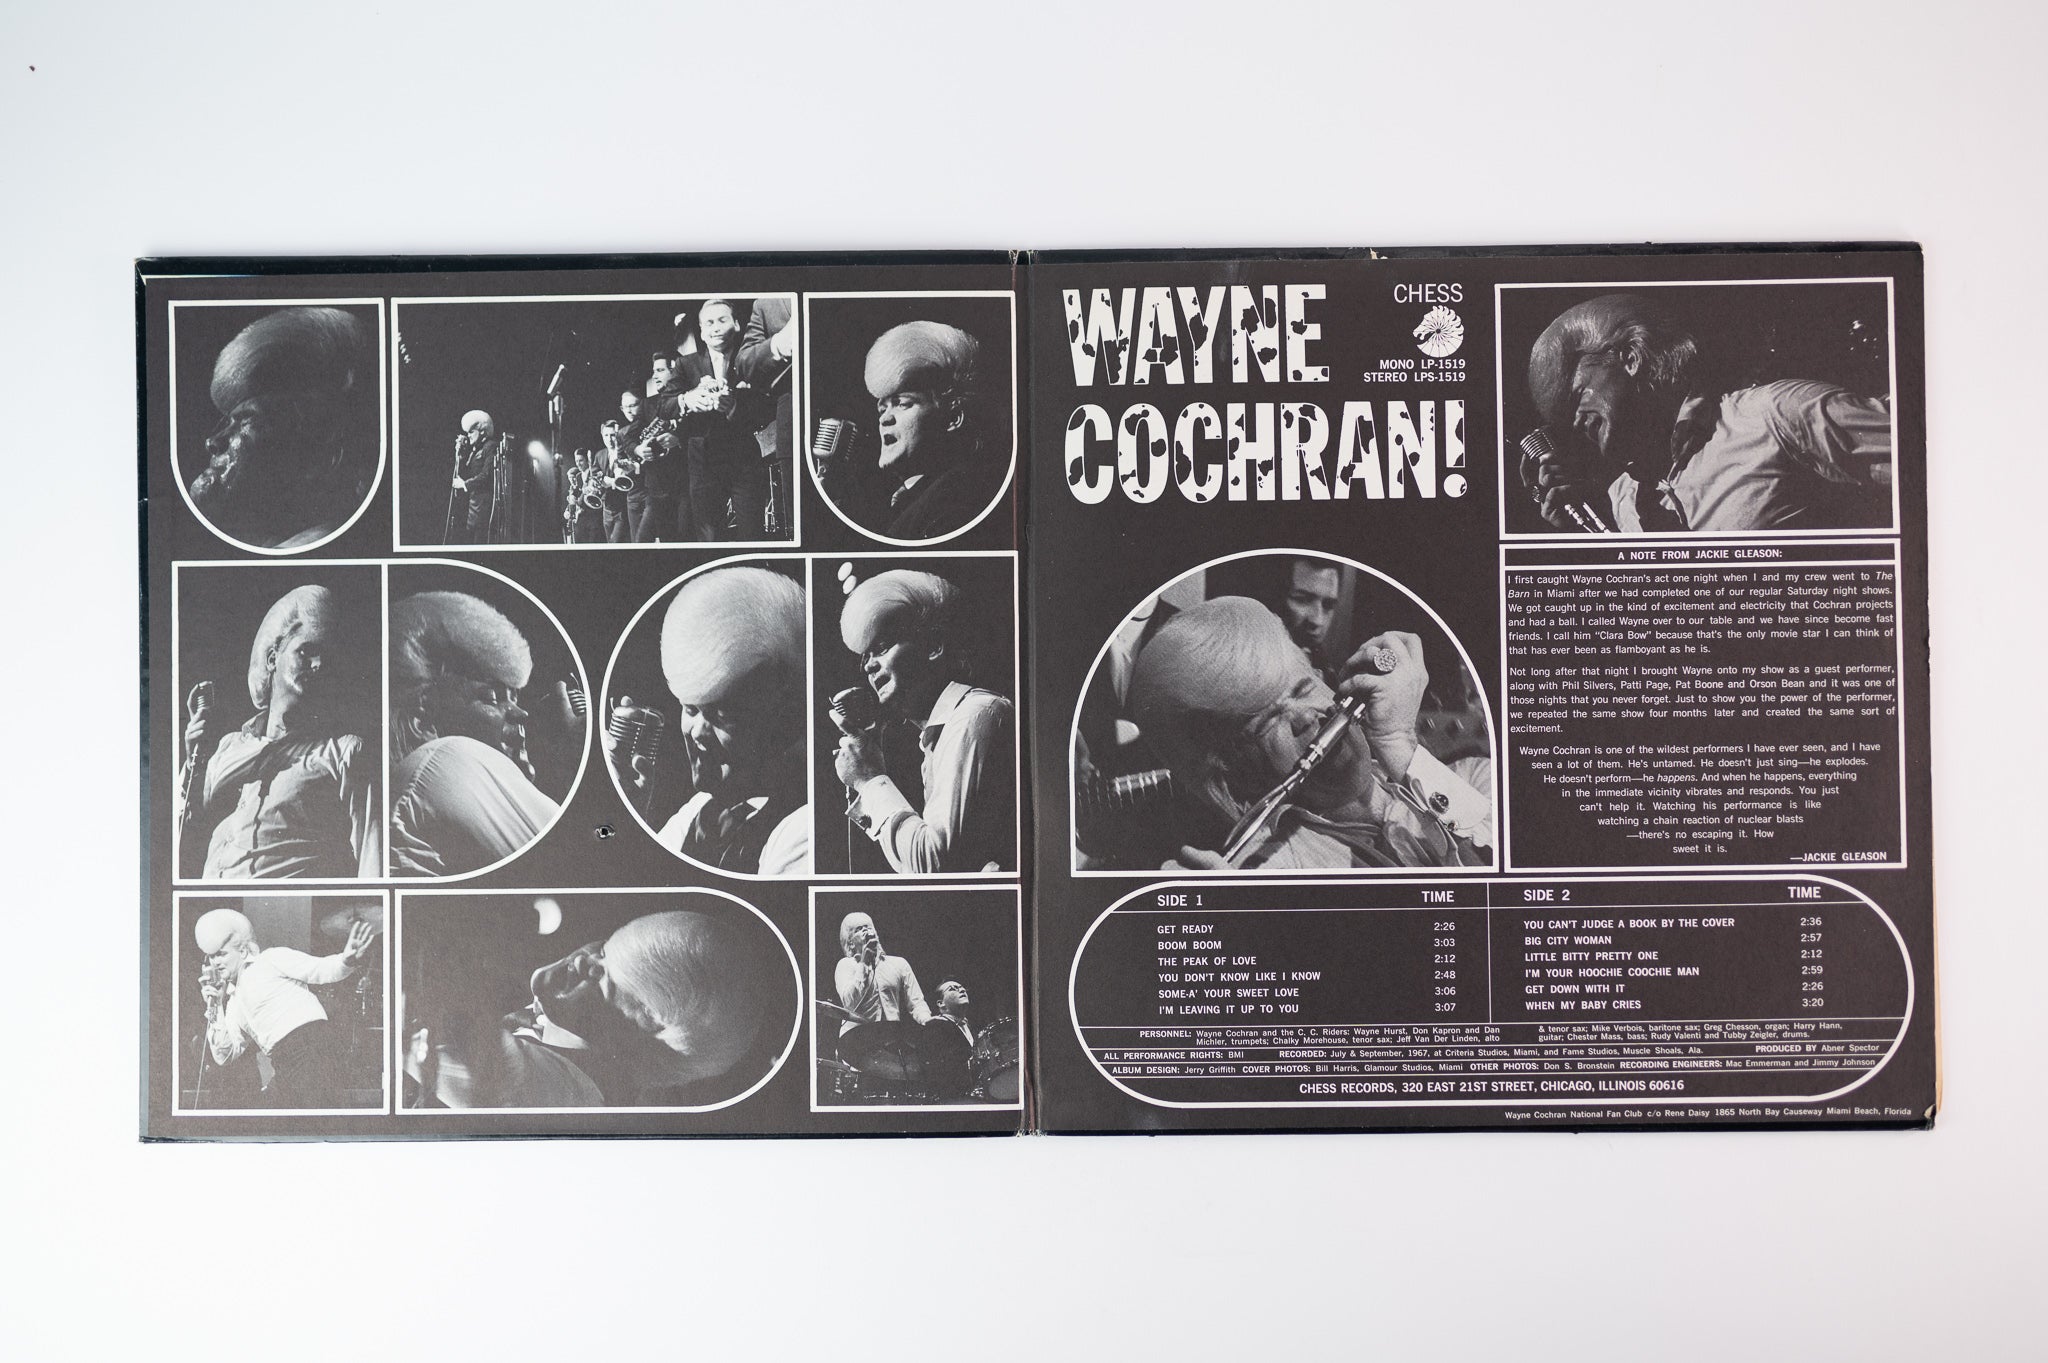 Wayne Cochran - Wayne Cochran! on Chess